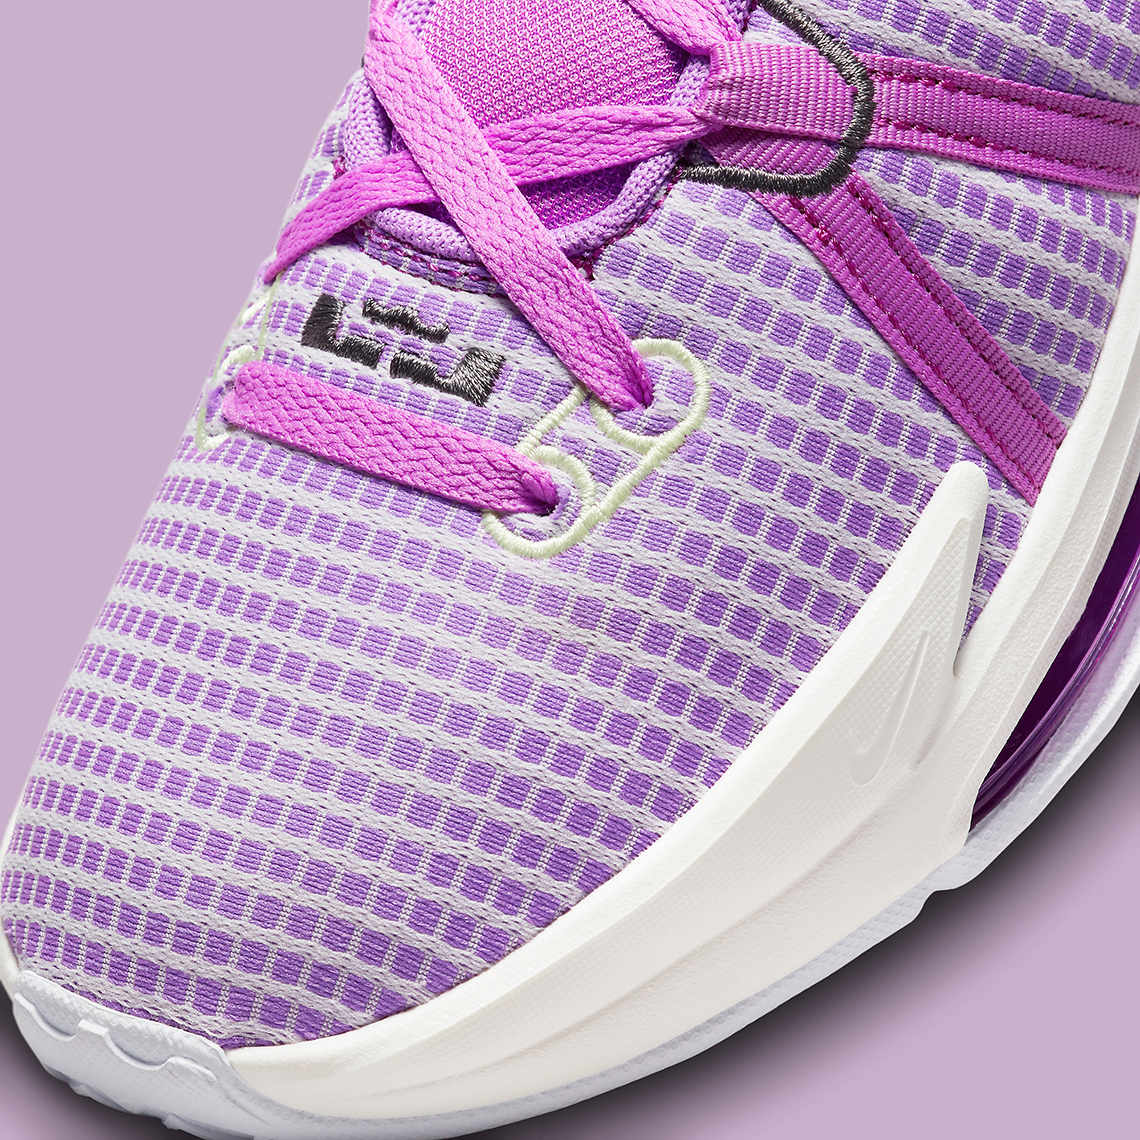 Nike shox Lebron Witness 7 Purple Yellow Dm1123 500 2